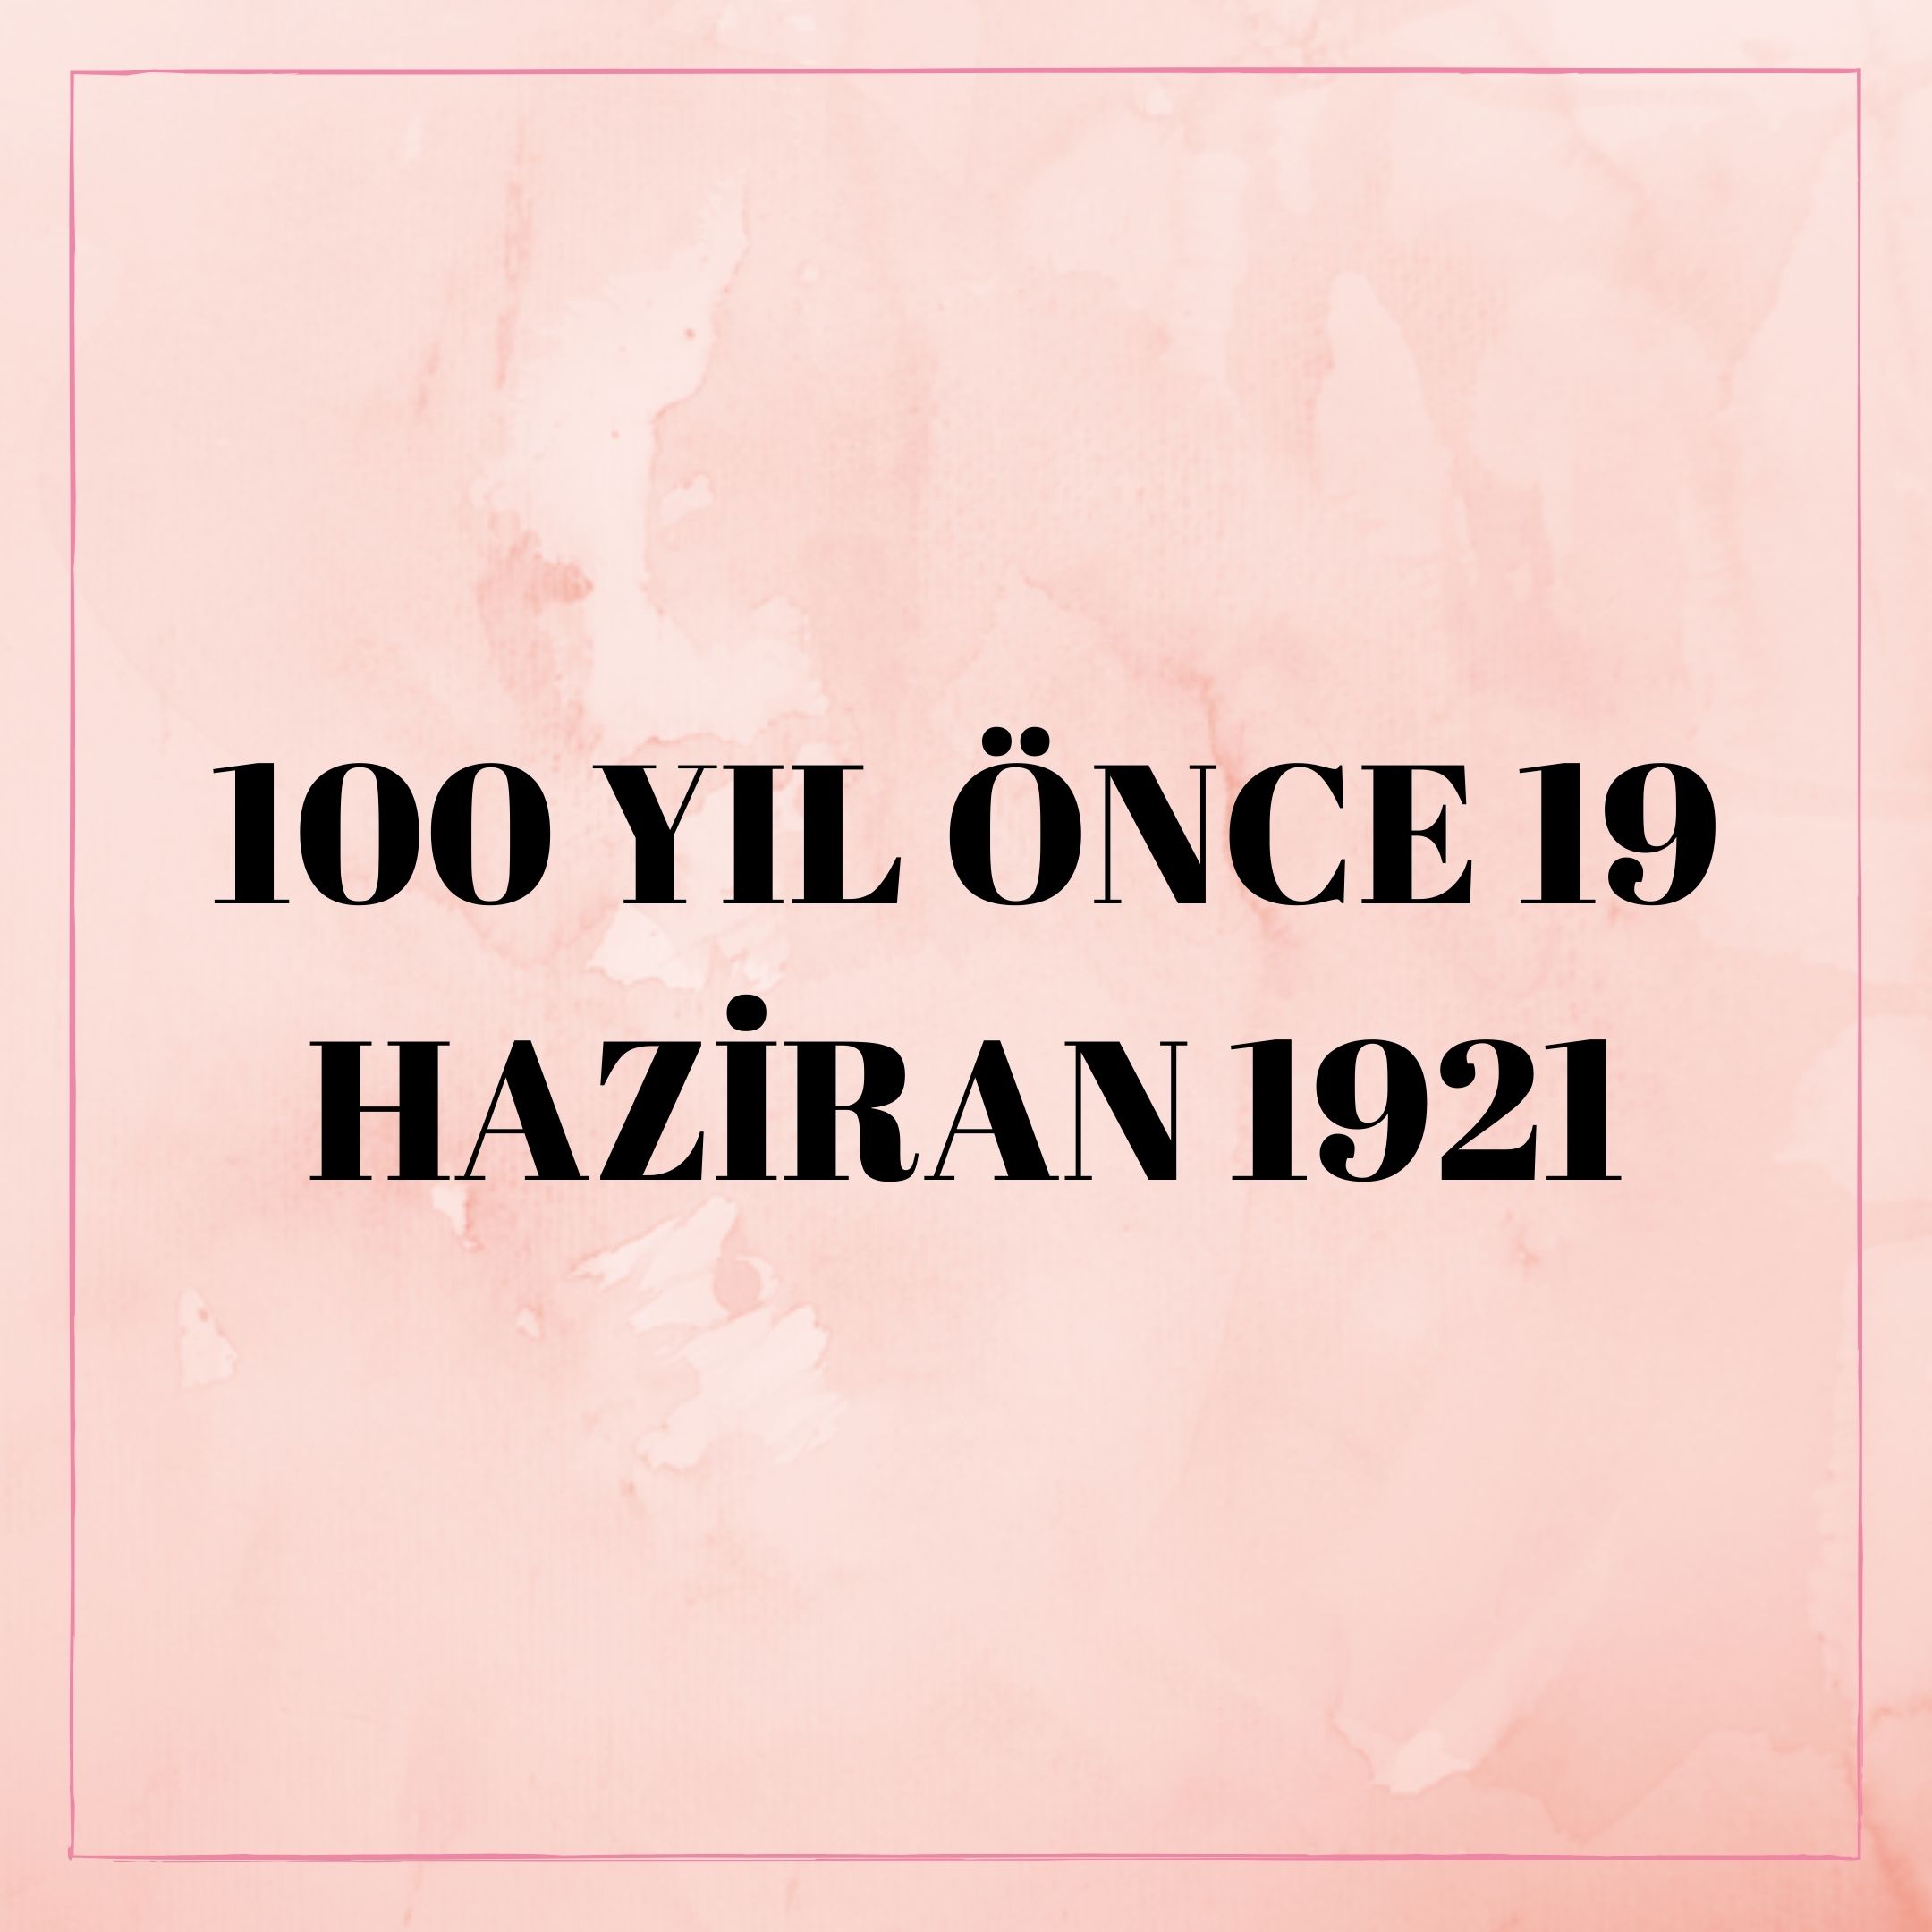 100 YIL ÖNCE 19 HAZİRAN 1921